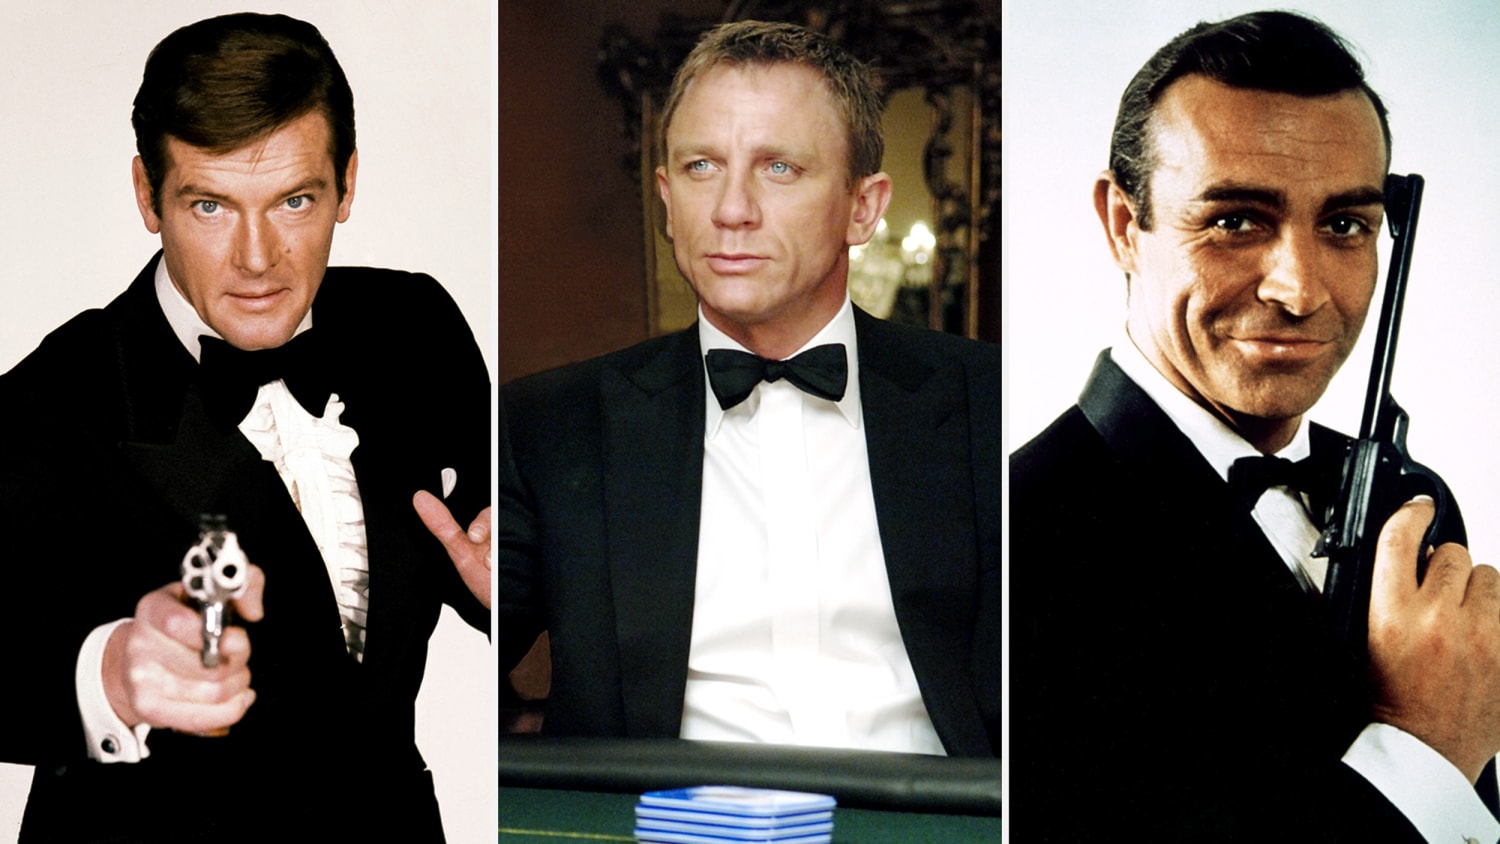 James Bond (reboot series) - Wikipedia